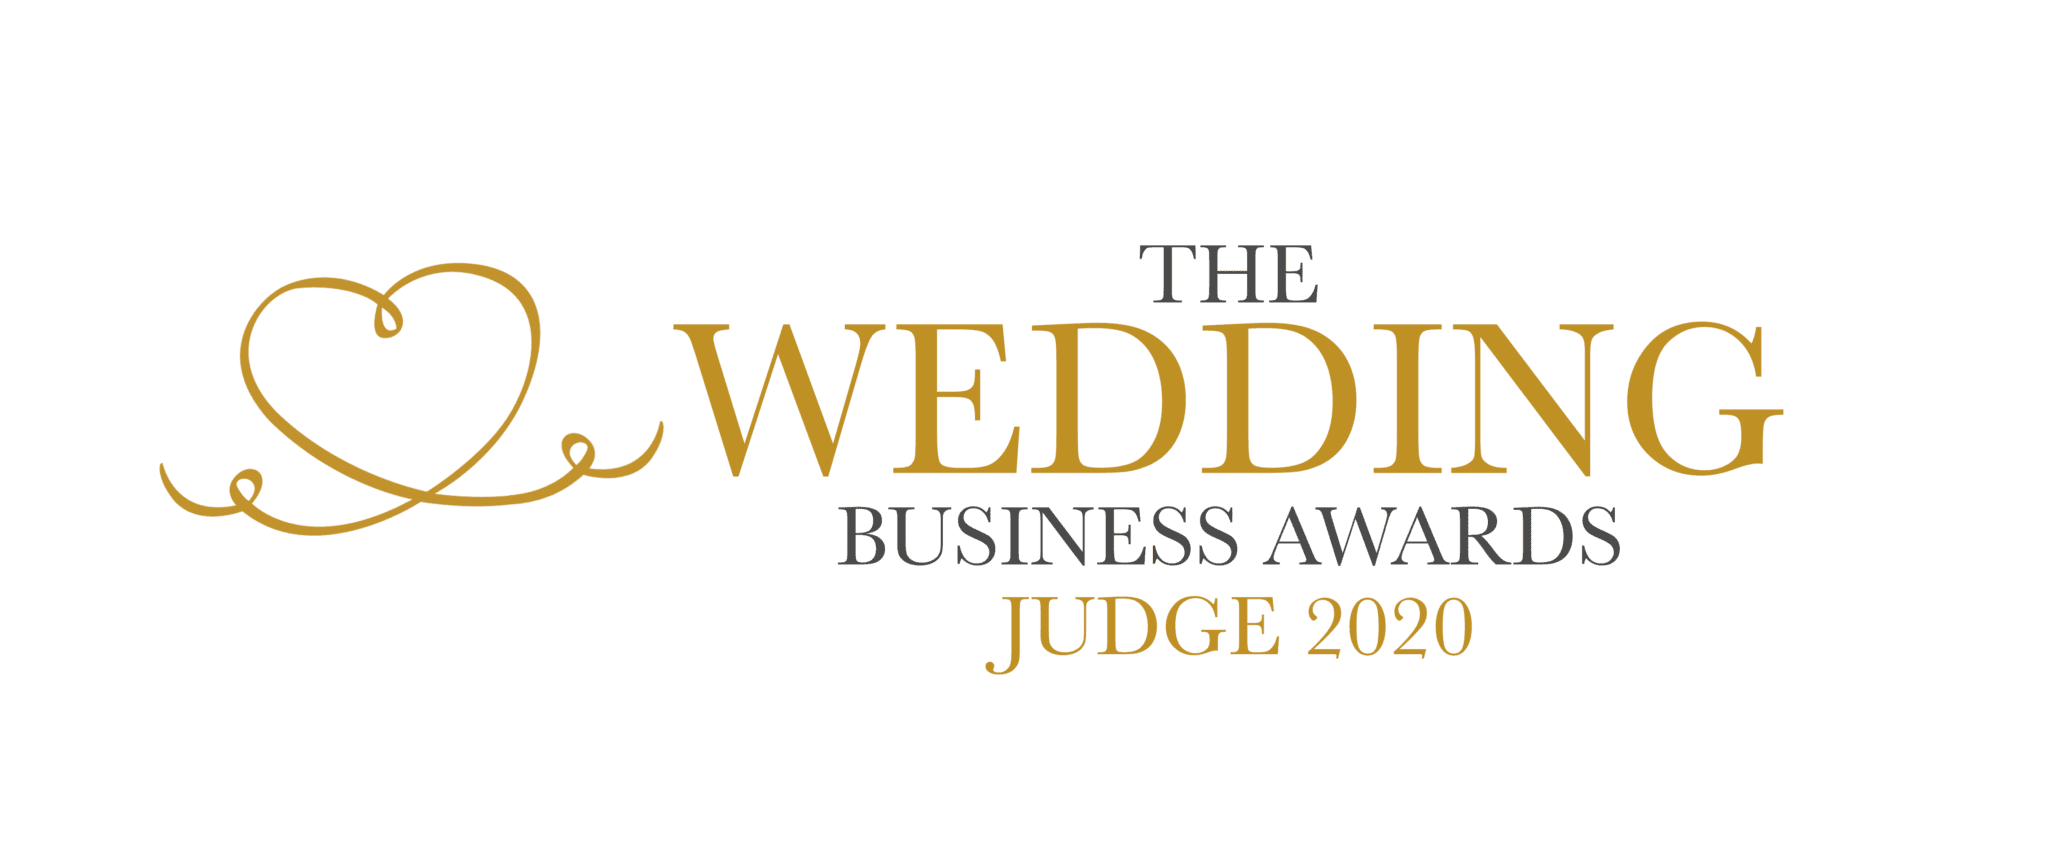 The Wedding Business Awards Judge